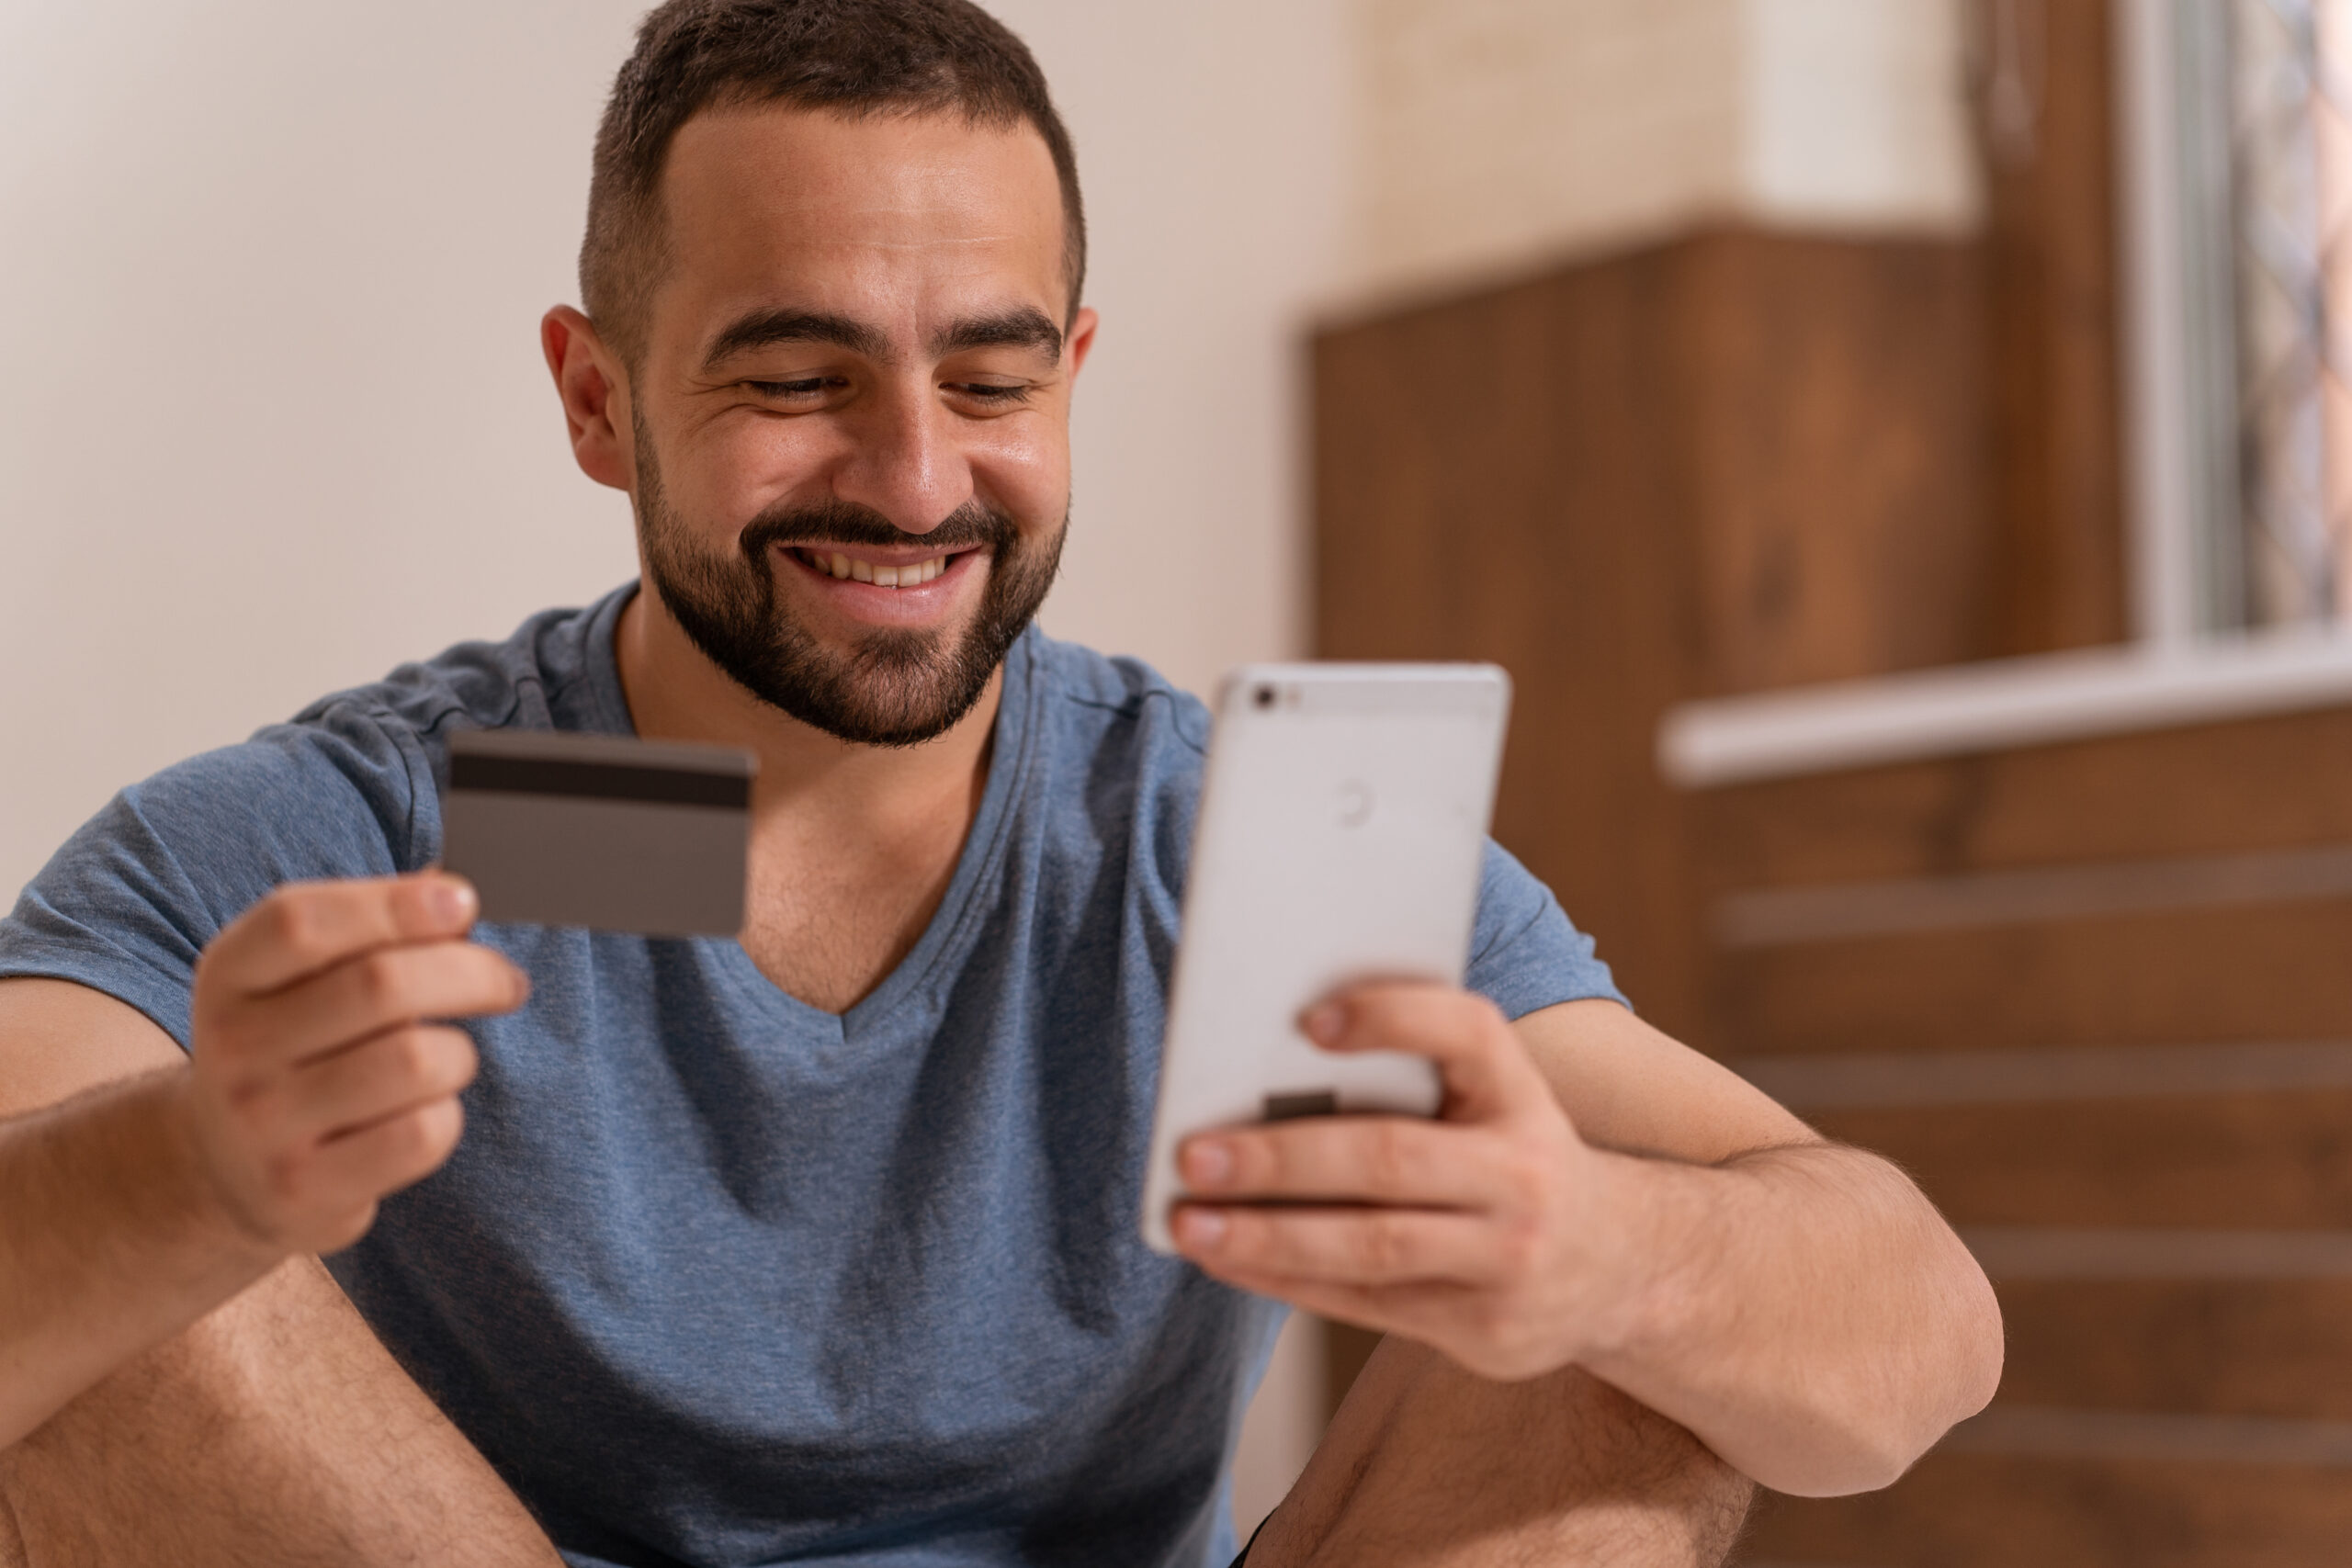 Man smiling looking at his phone and card